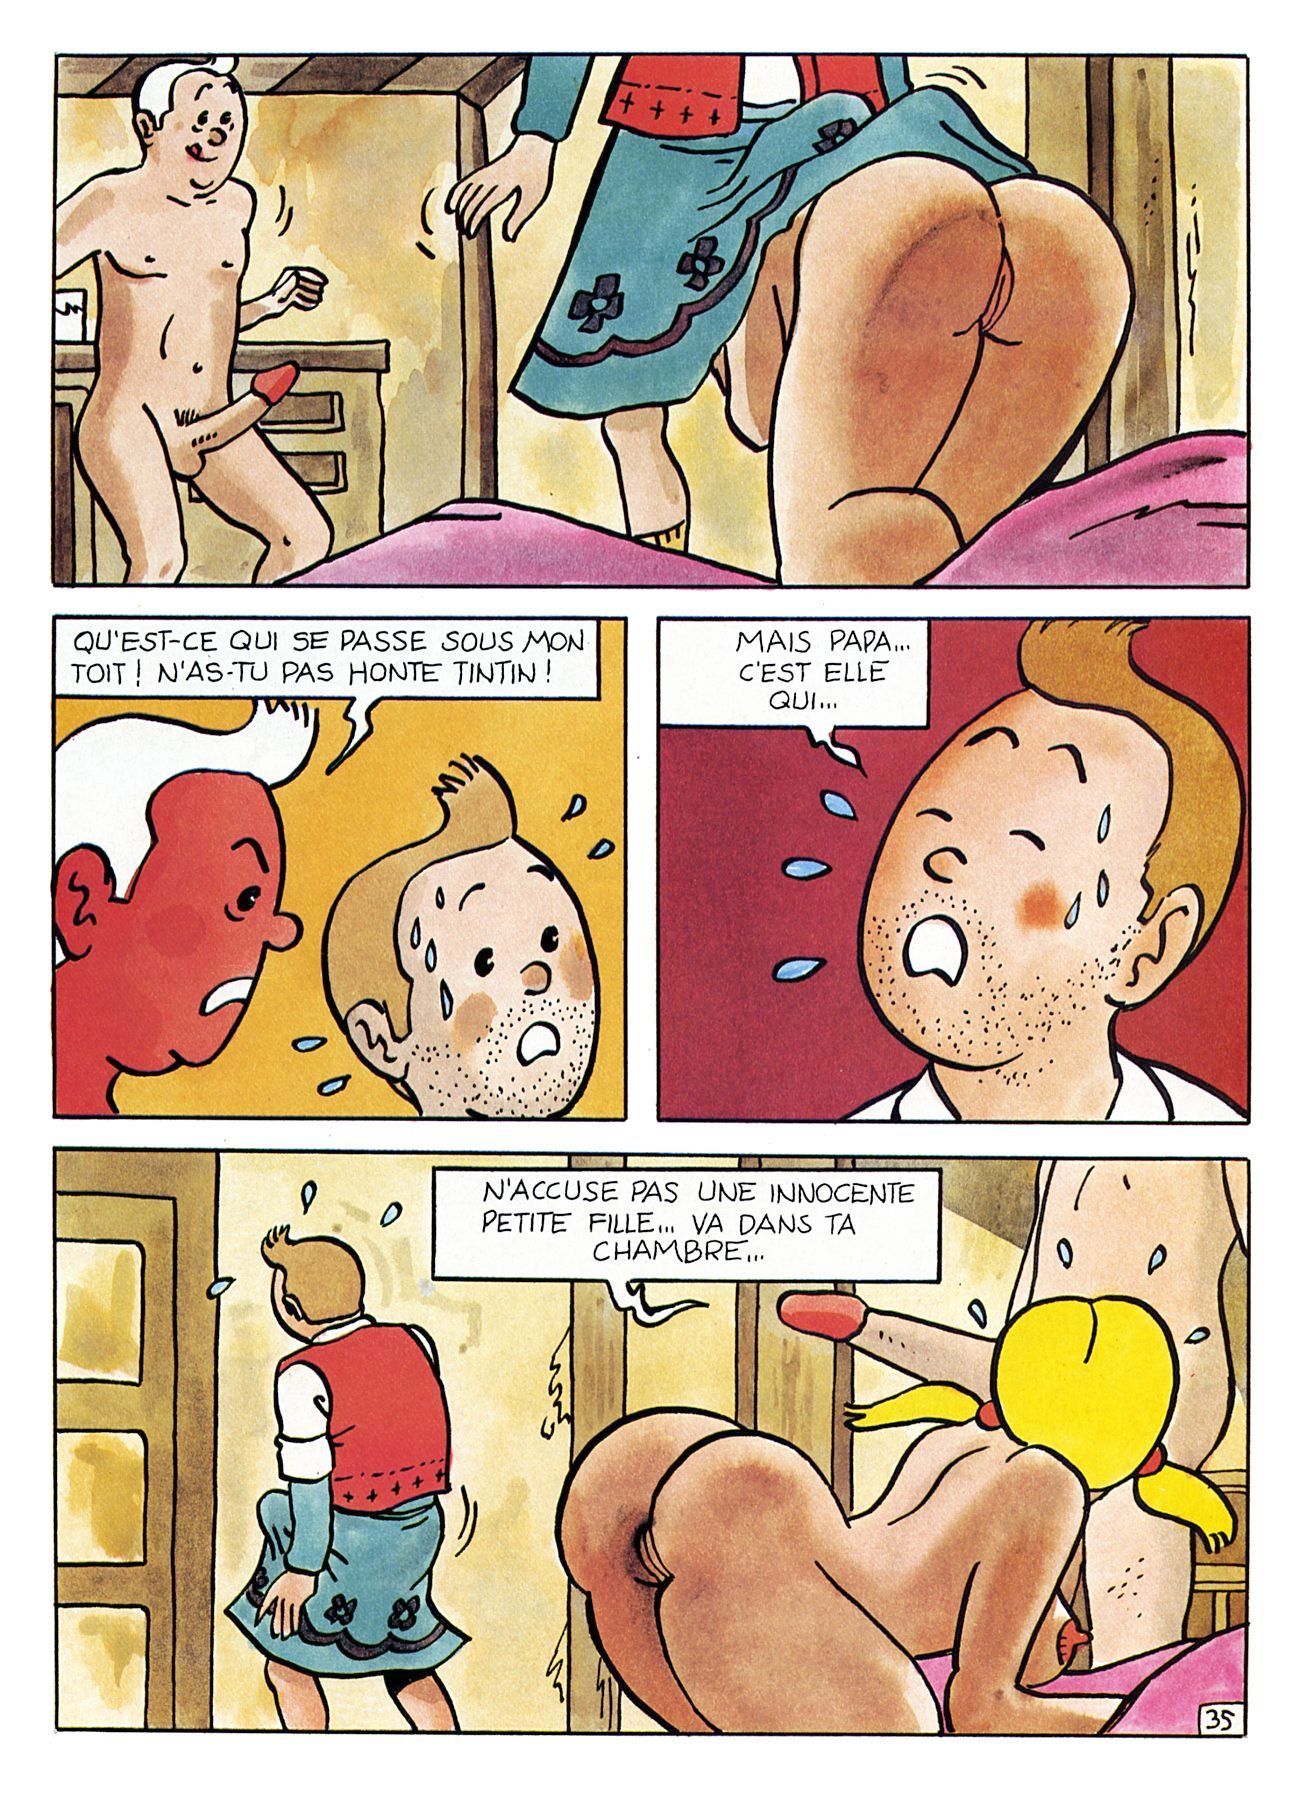 La-Vie-Sexuelle-De-Tintin-1992-All-64-pages-French-page35--Gotofap.tk--61760340.jpg